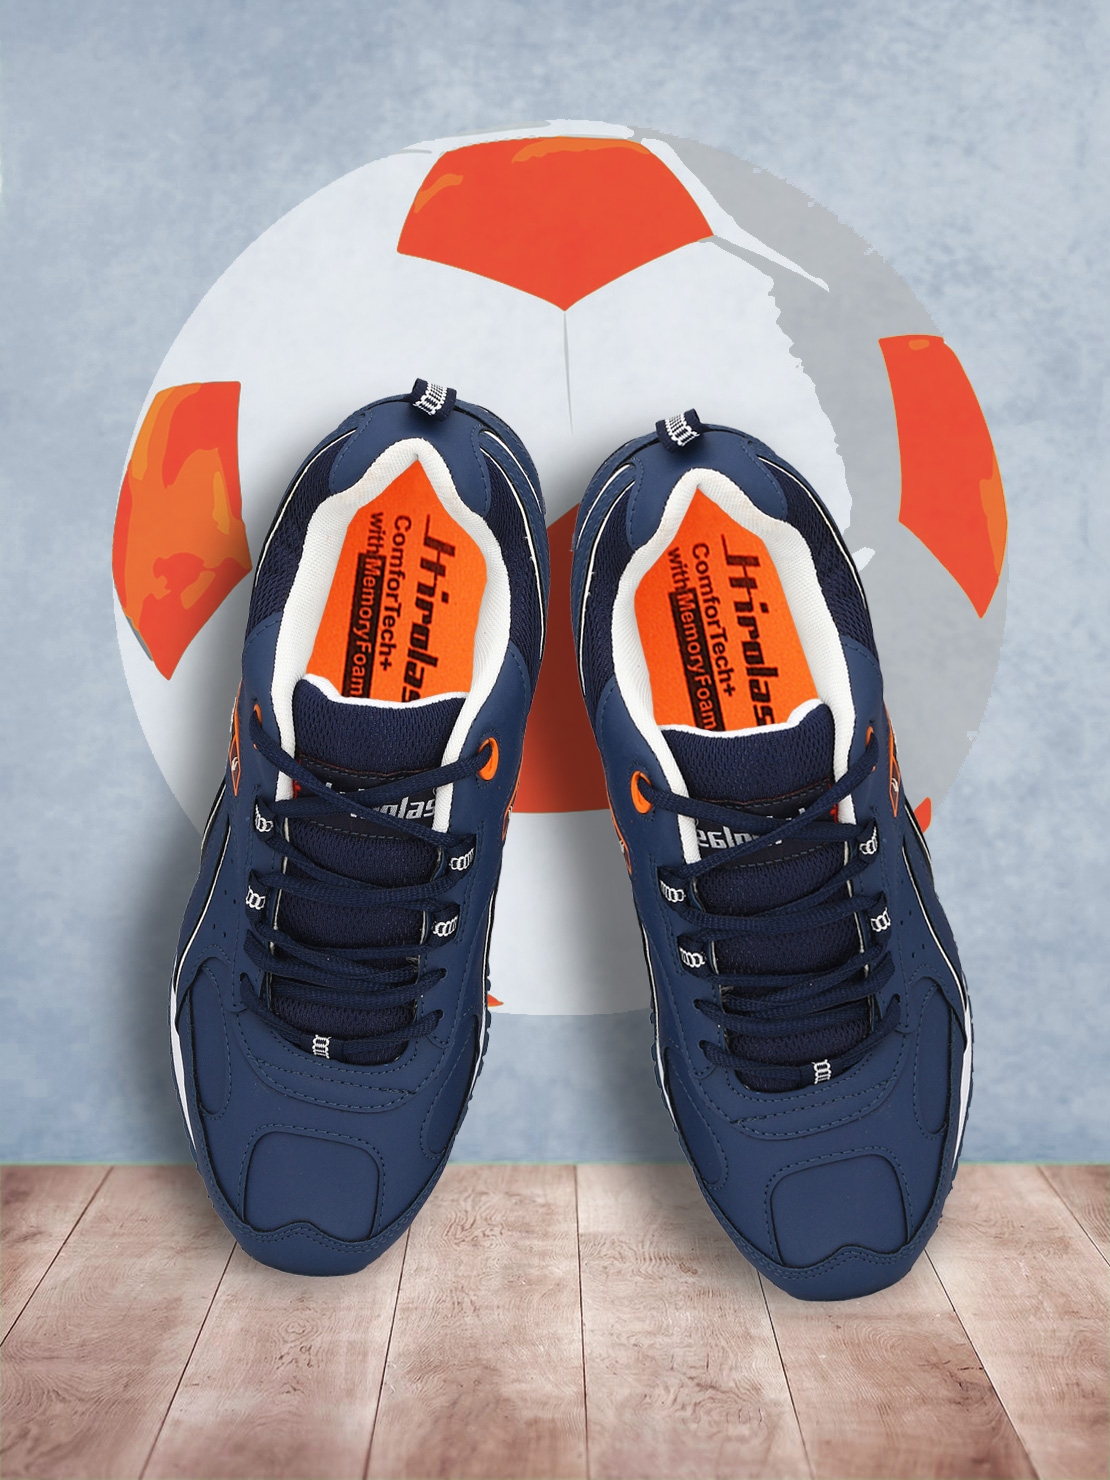 Hirolas | Hirolas Multi Sport Shock Absorbing Walking  Running Fitness Athletic Training Gym Sneaker Shoes - Blue